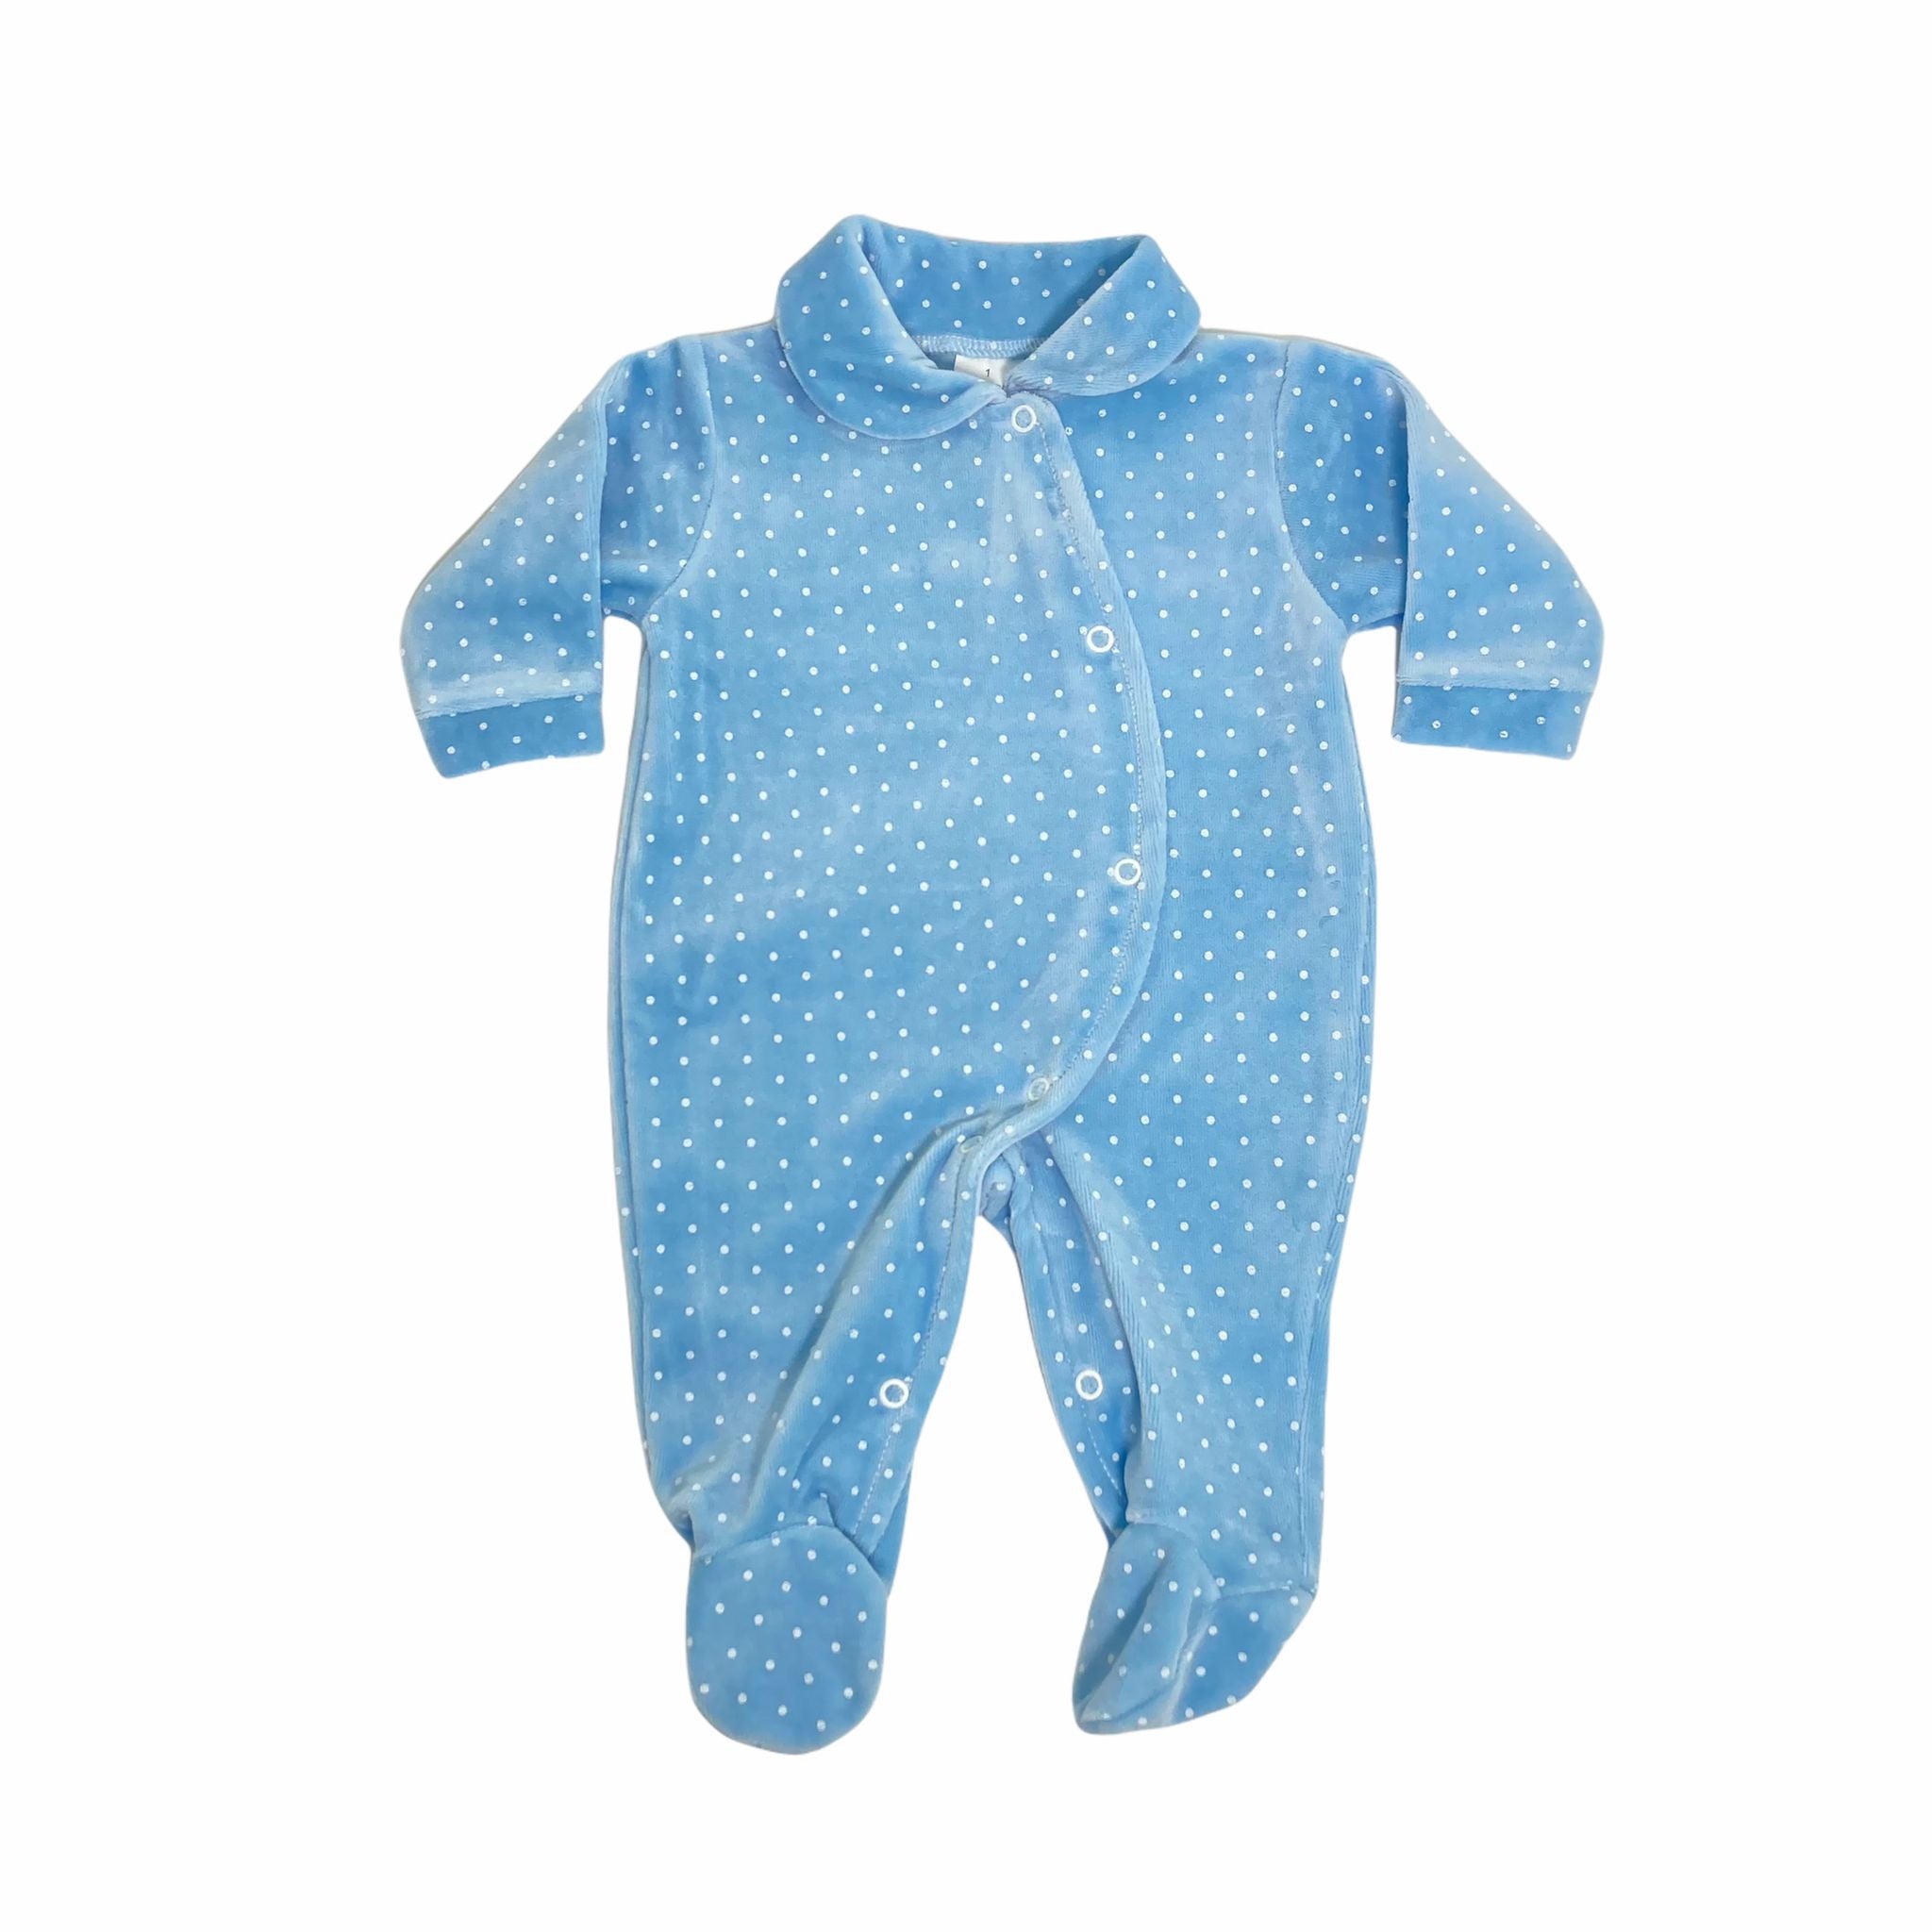 Tutina Intera In Ciniglia Azzurra A Pois Bianchi Neonato BABY FASHION 1505 - Baby Fashion - LuxuryKids